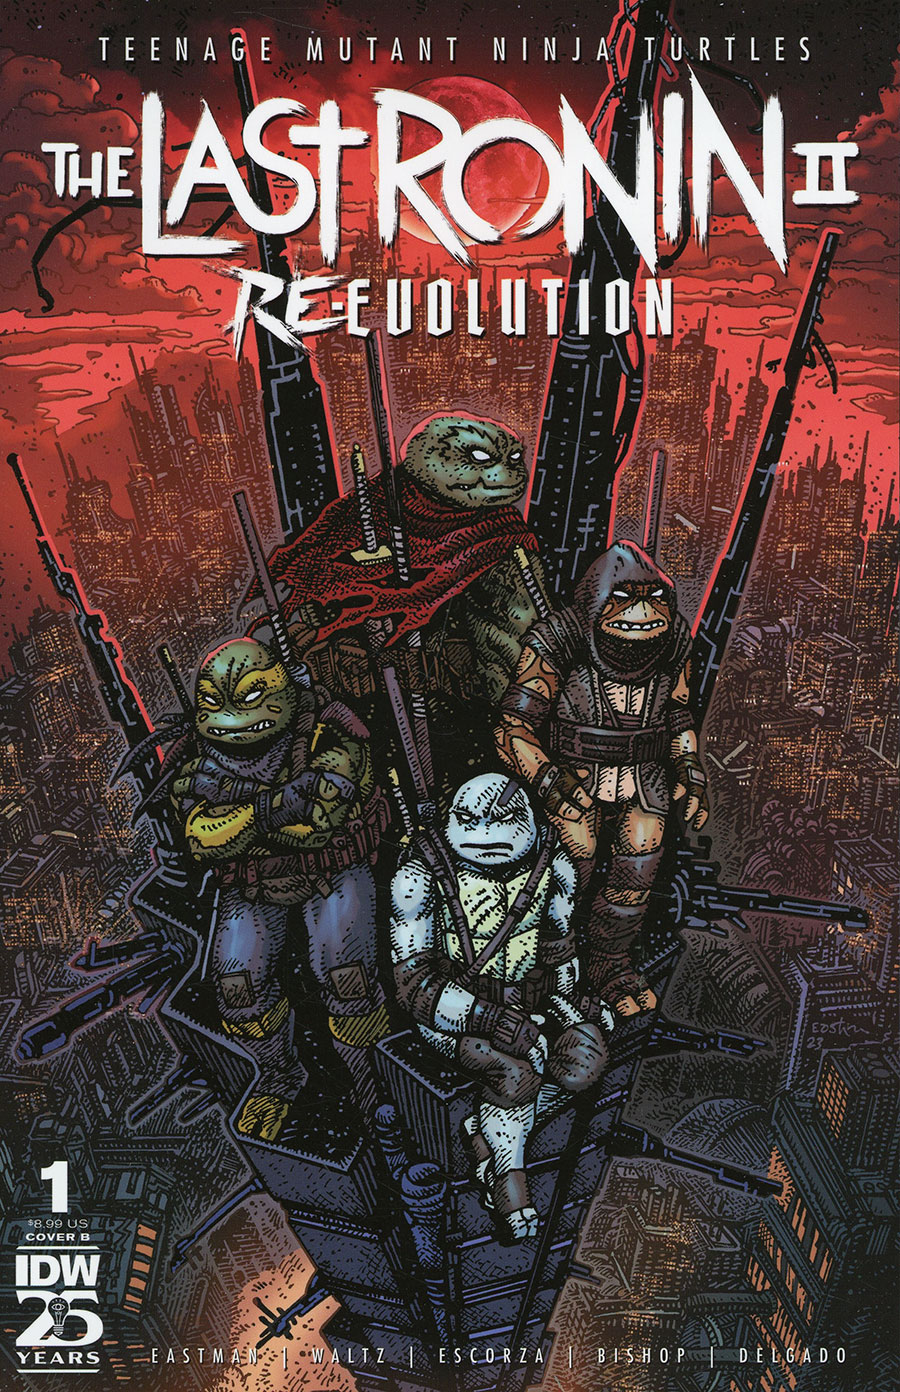 Teenage Mutant Ninja Turtles The Last Ronin II Re-Evolution #1 Cover B Variant Kevin Eastman Cover